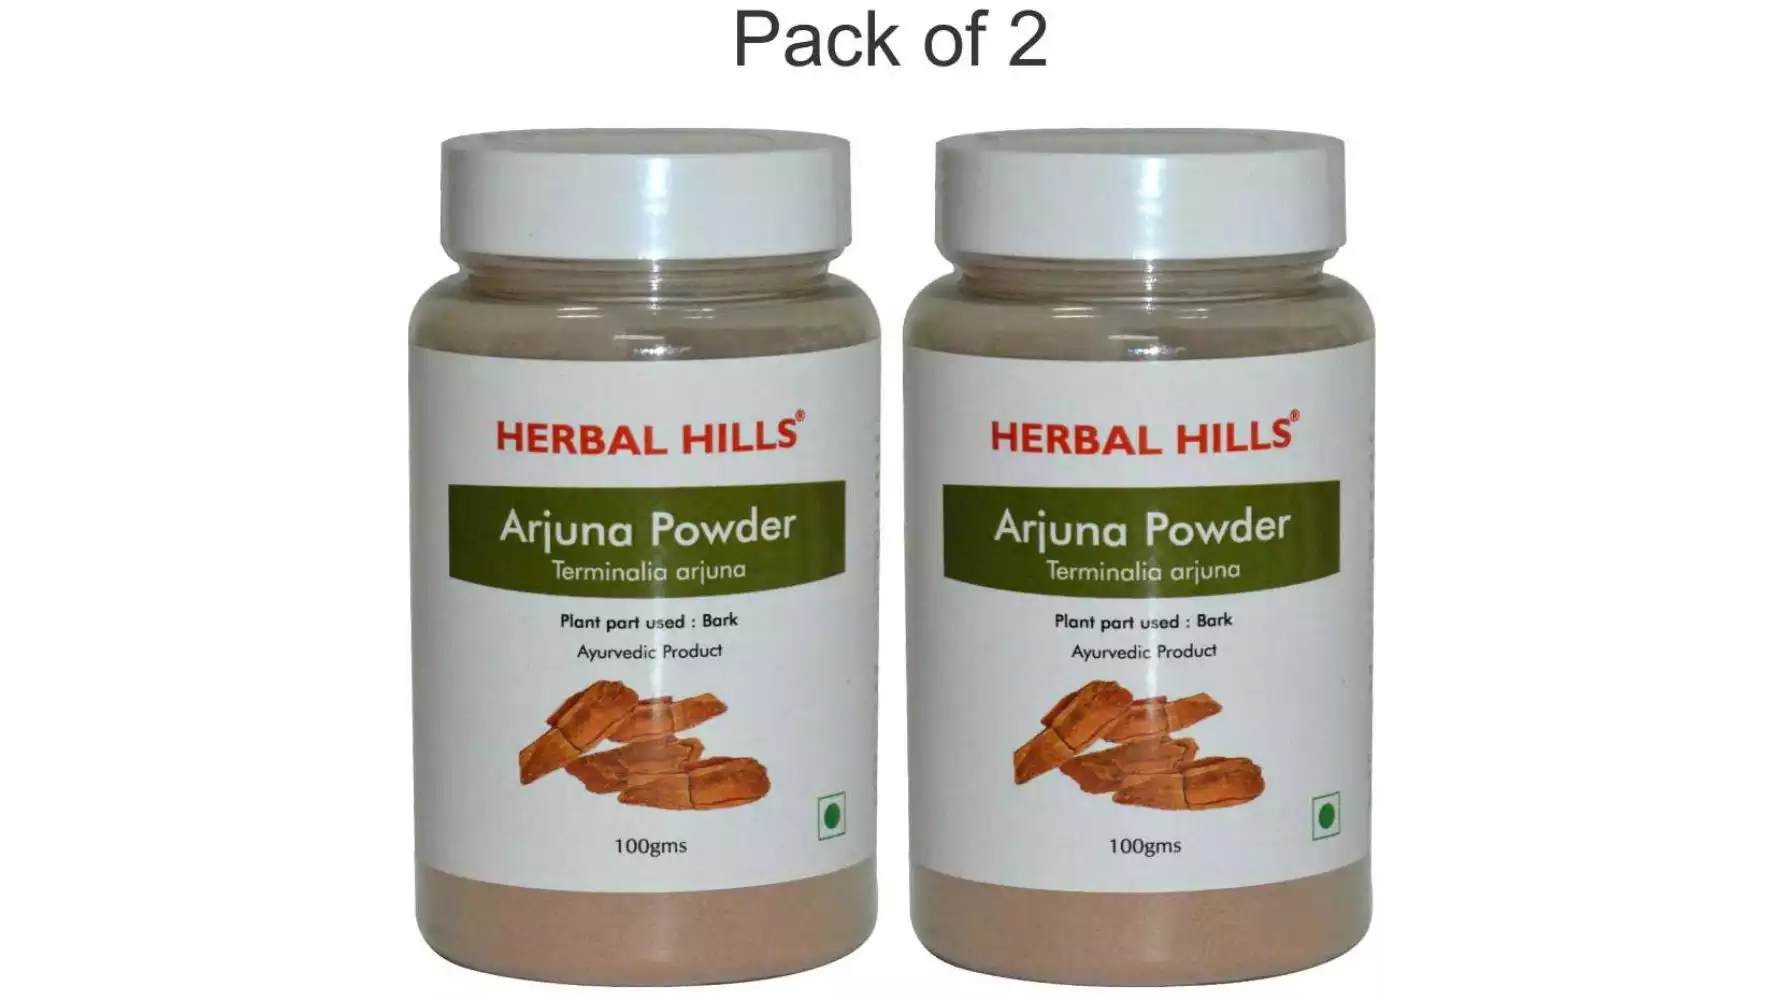 Herbal Hills Arjuna Powder (100g, Pack of 2)